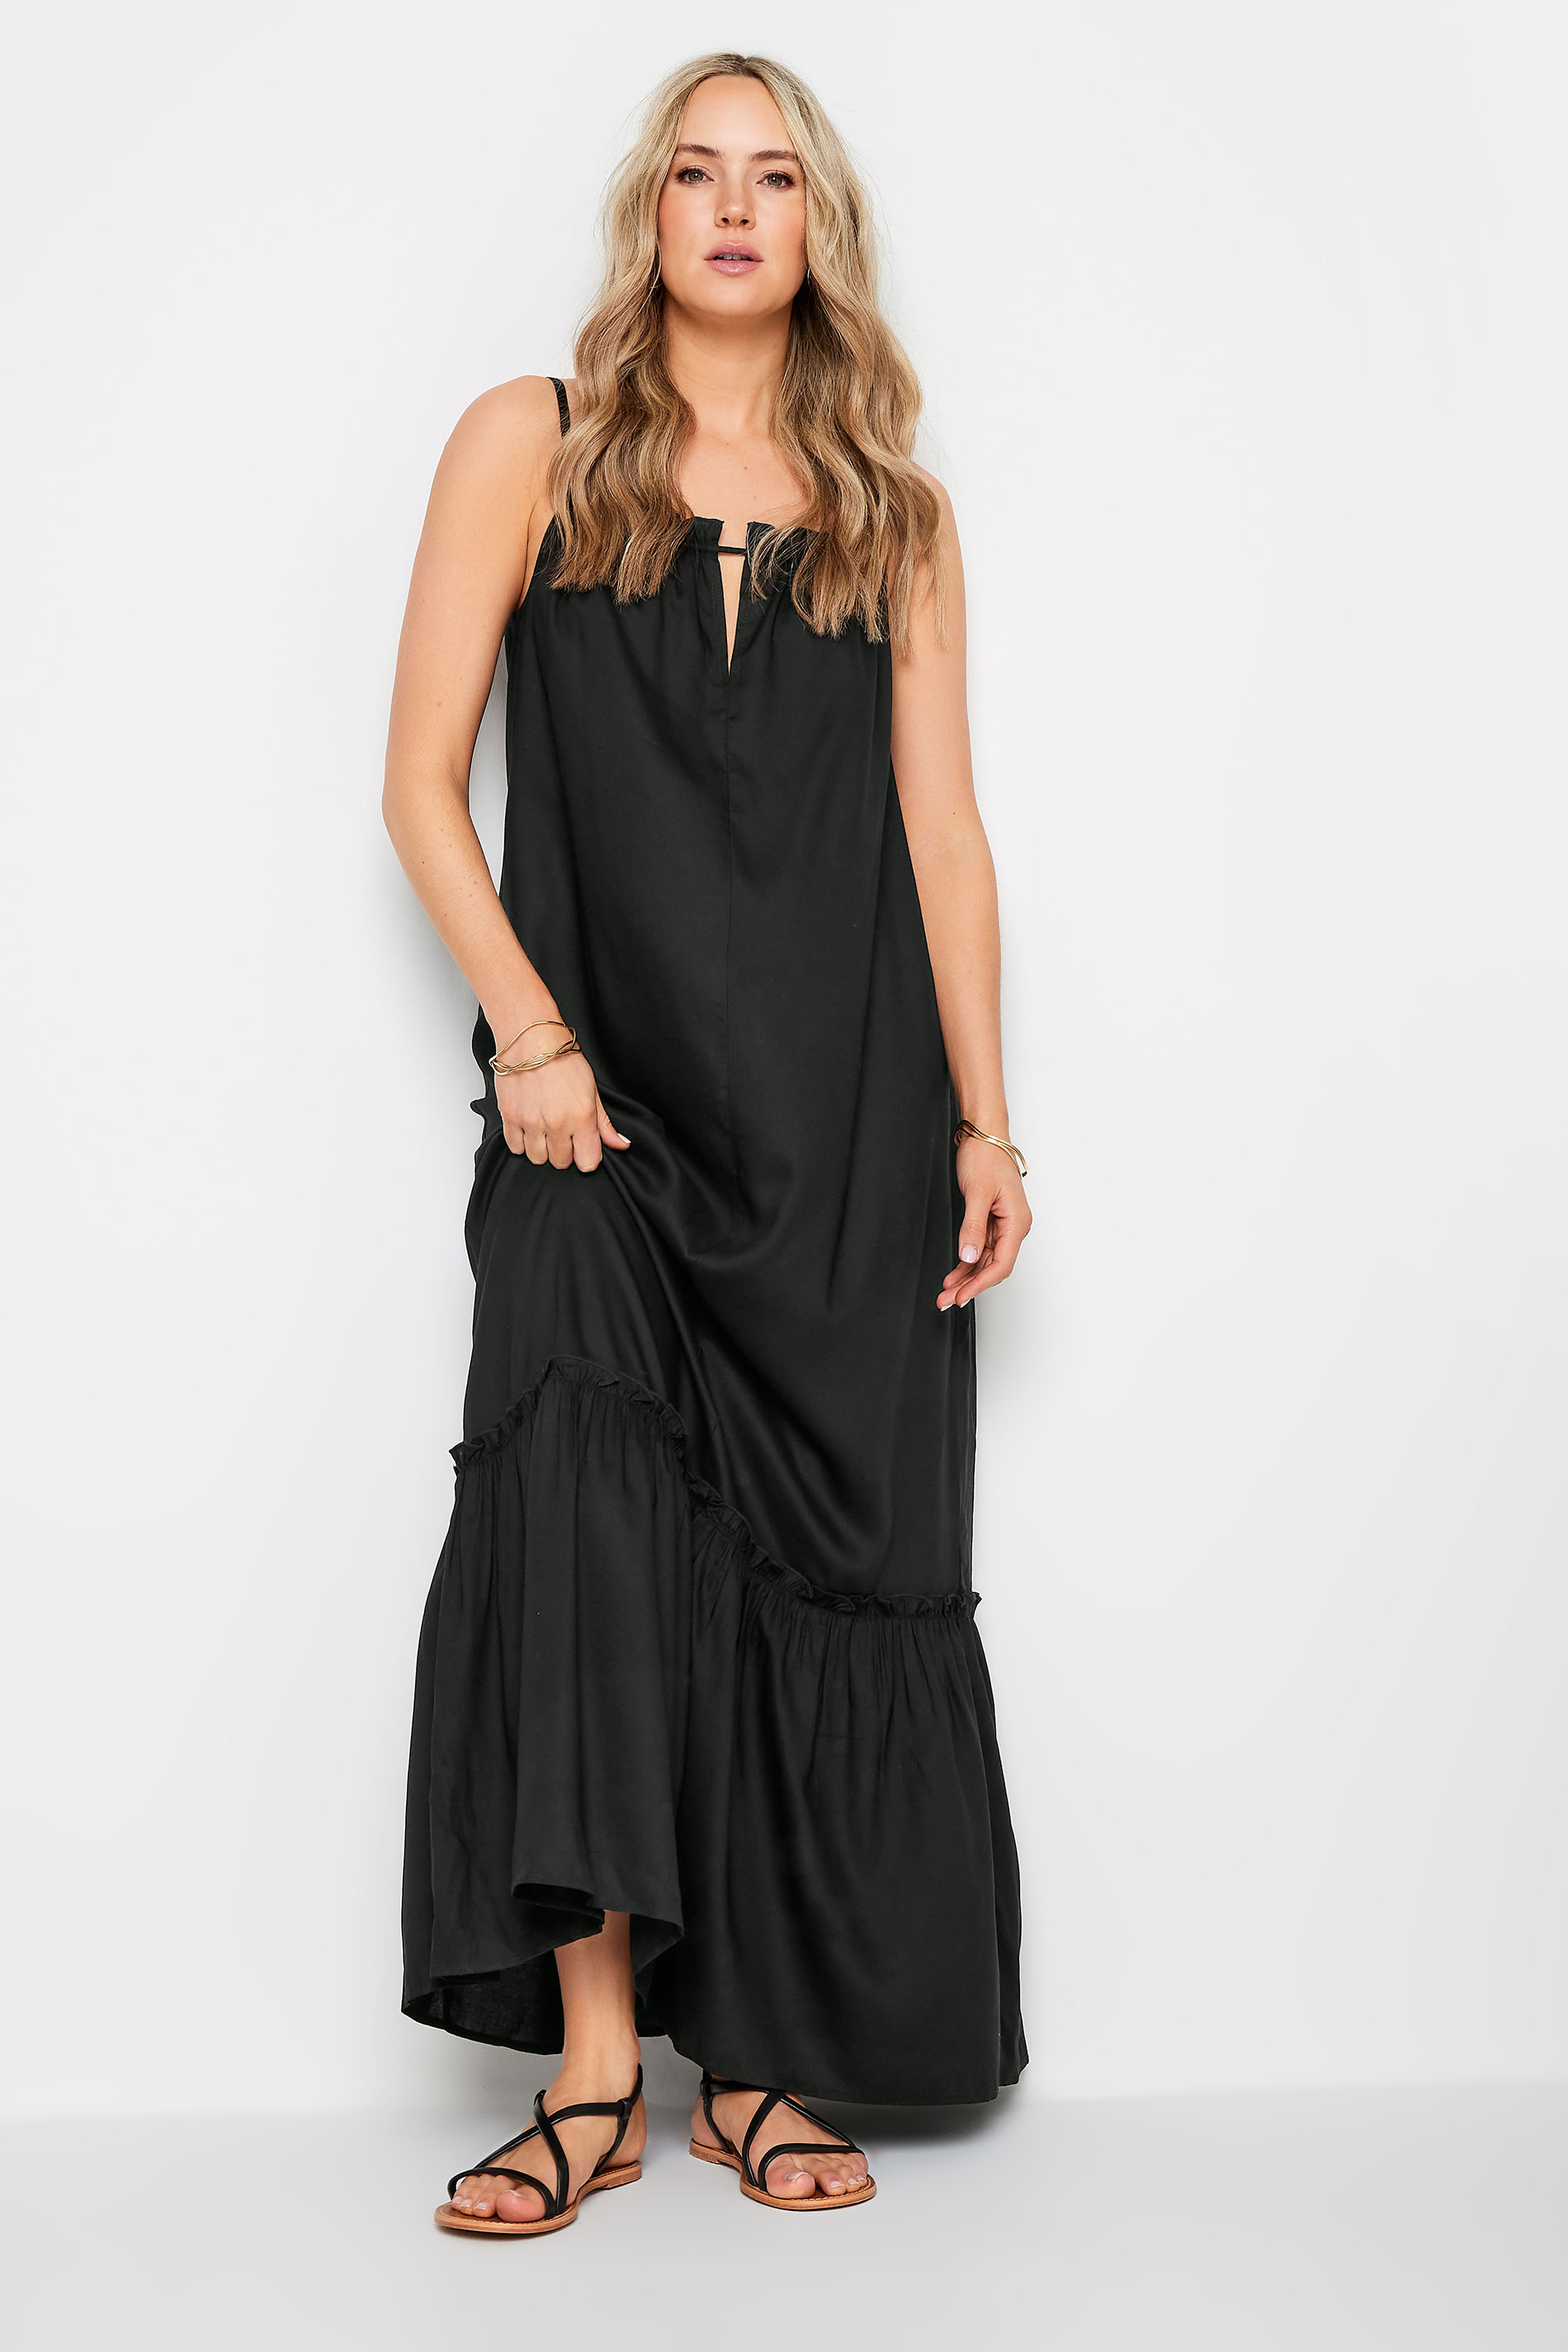 LTS Tall Women's Black Halter Neck Maxi Dress | Long Tall Sally 2